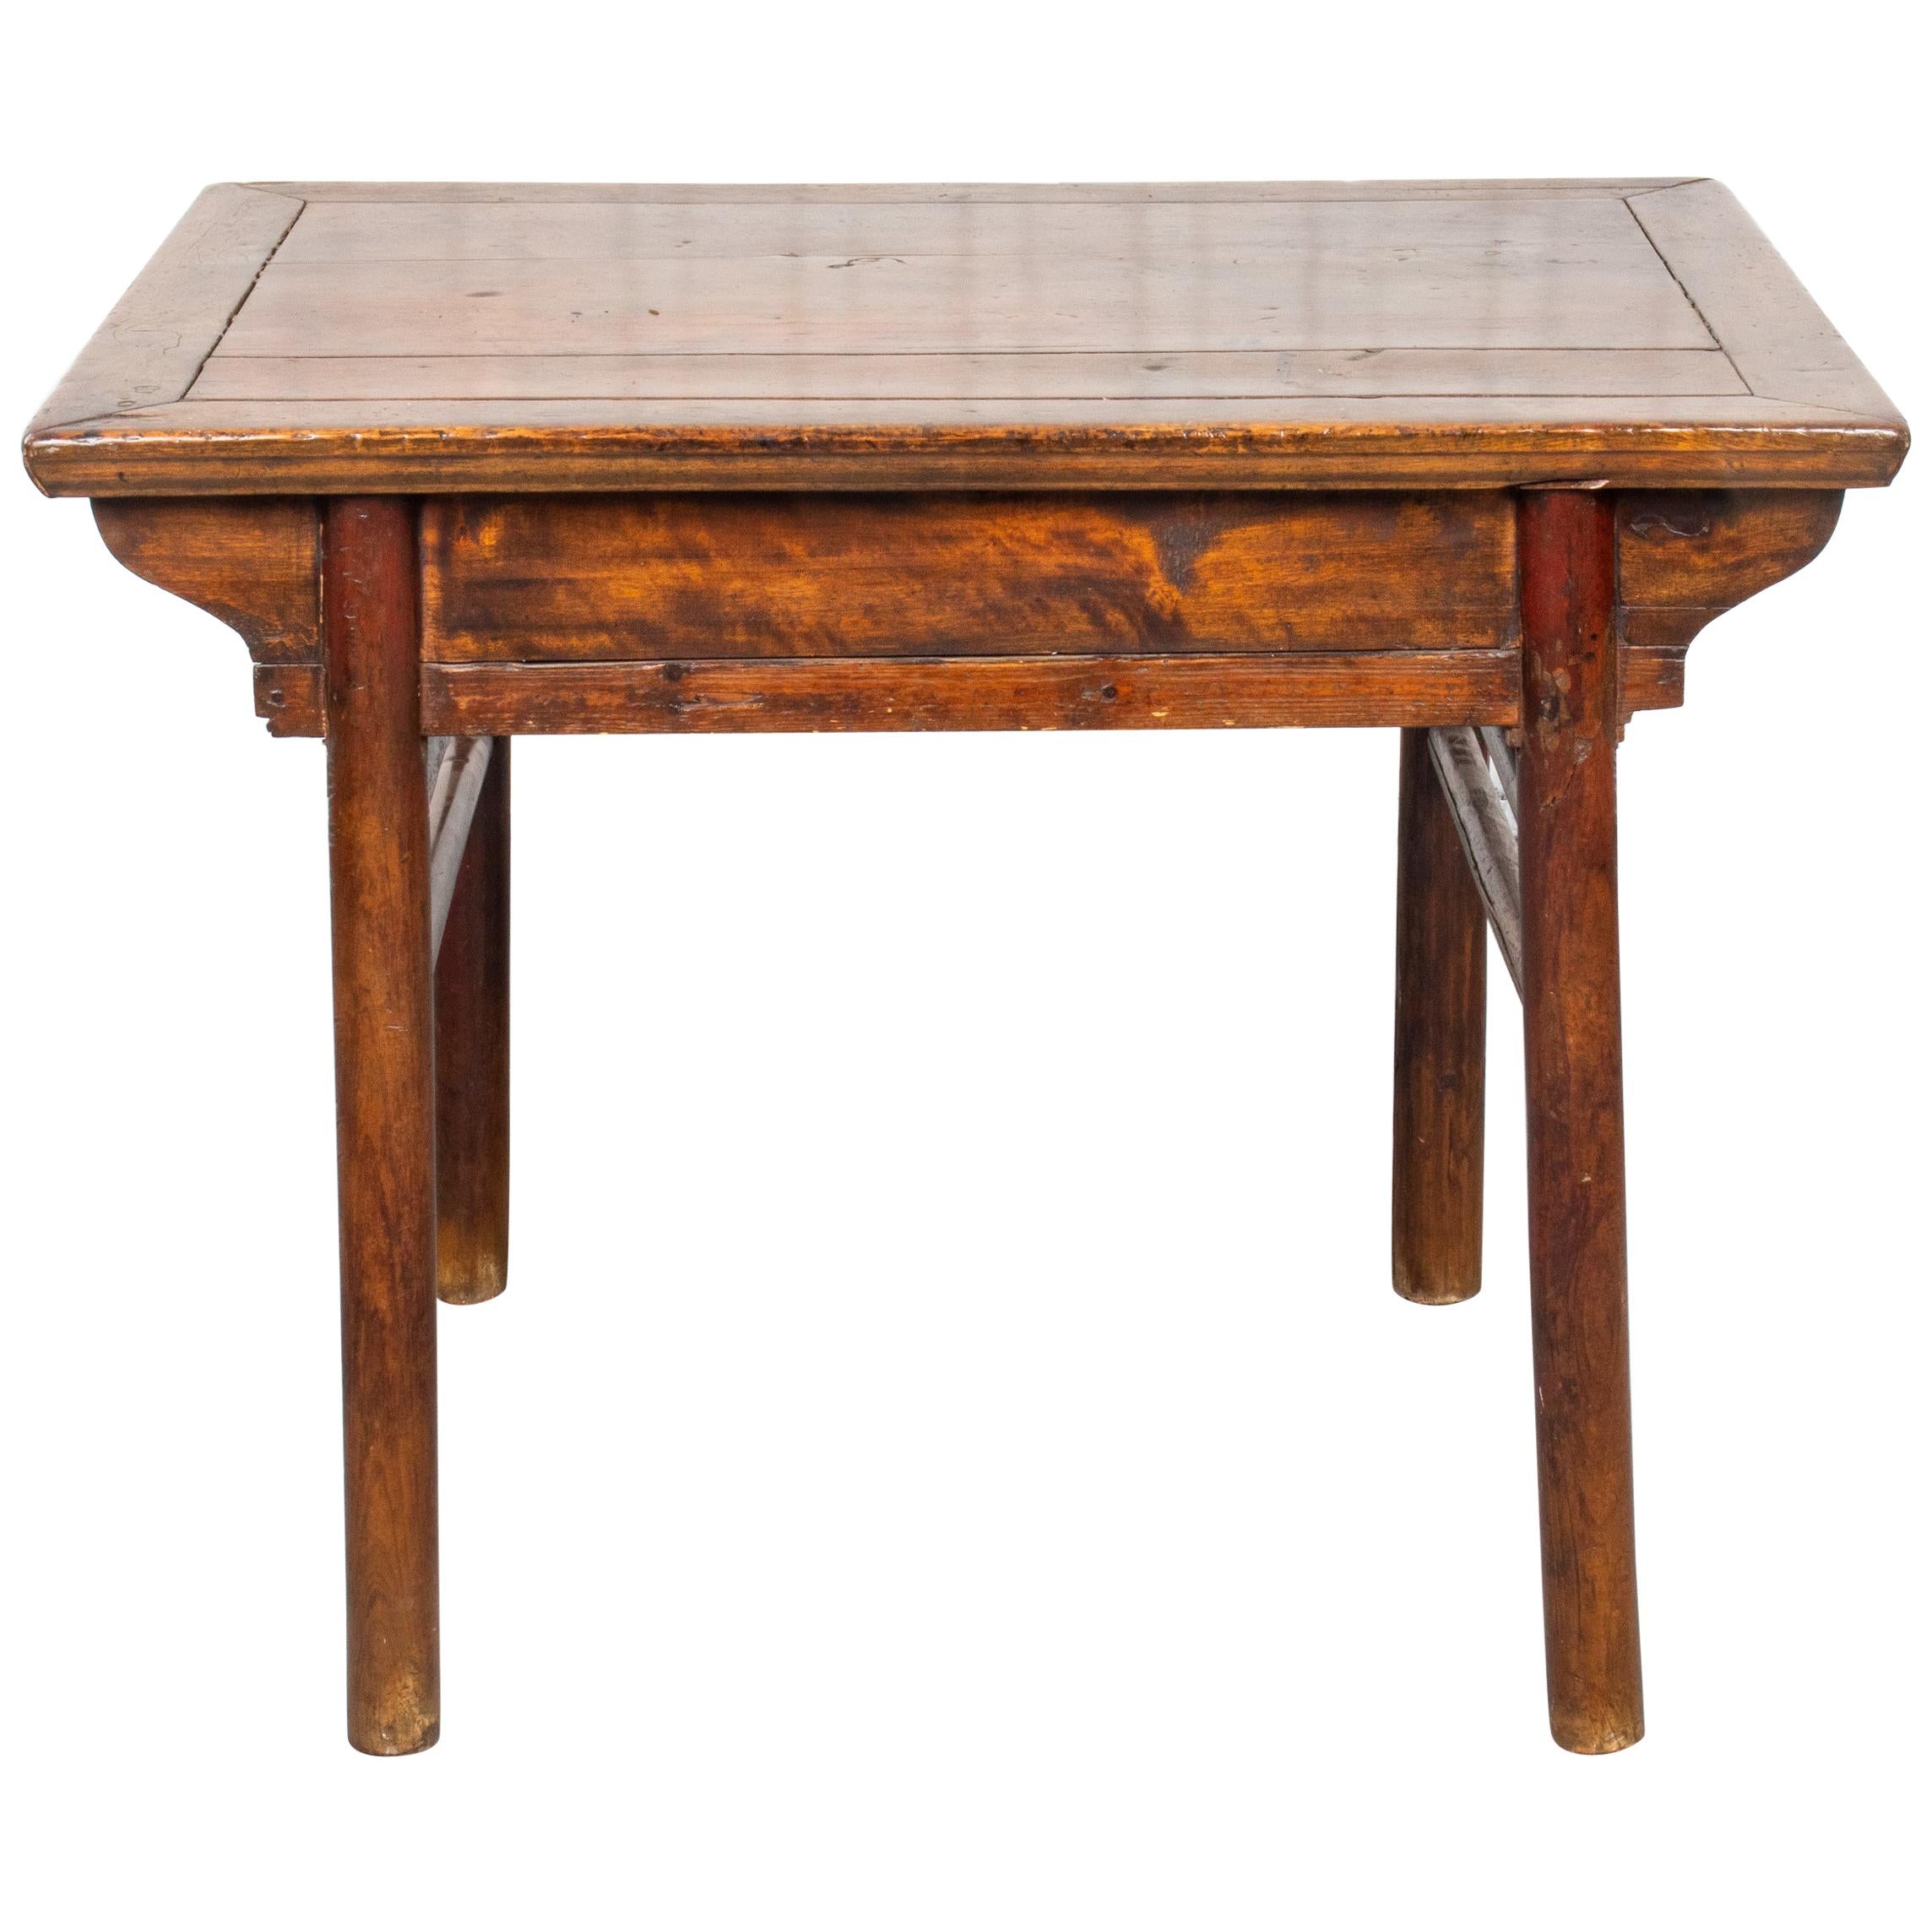 Chinese Carved Hardwood Altar Table or Desk